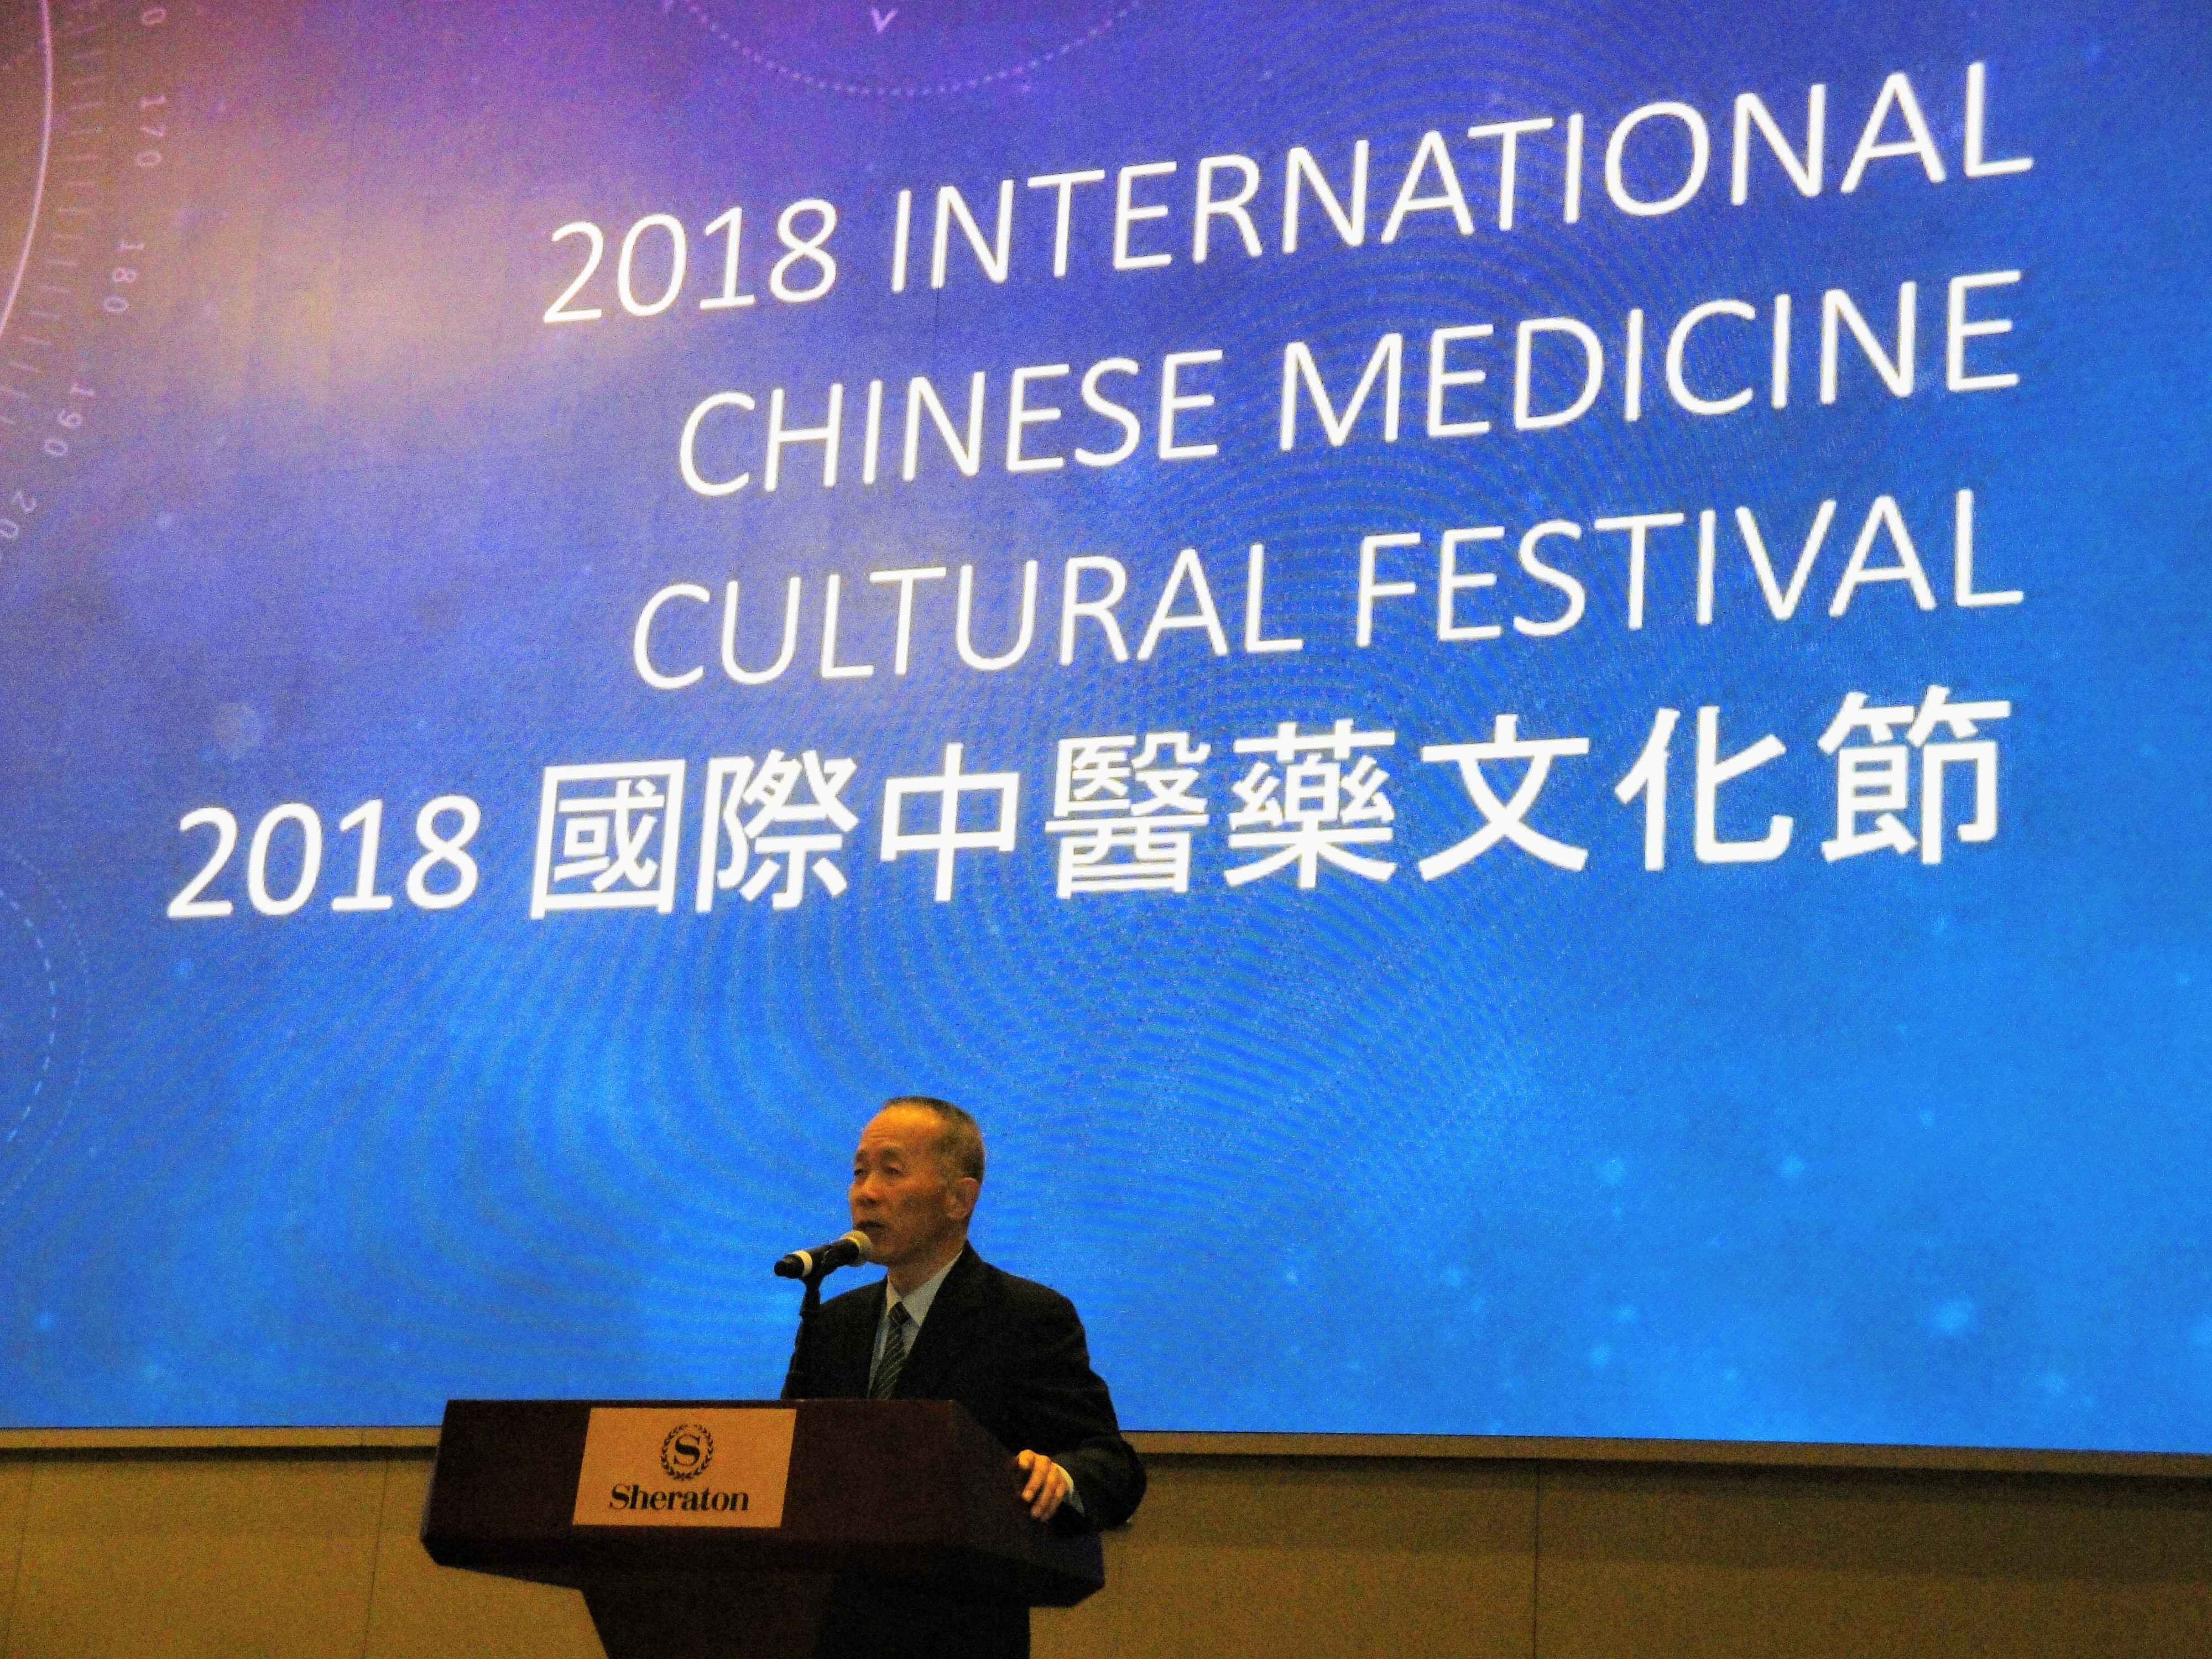 20181201 TCMF International Chinese Medicine Cultural Festival, Sheraton Hotel, San Gabriel, Ca. USA, photography by Henry N